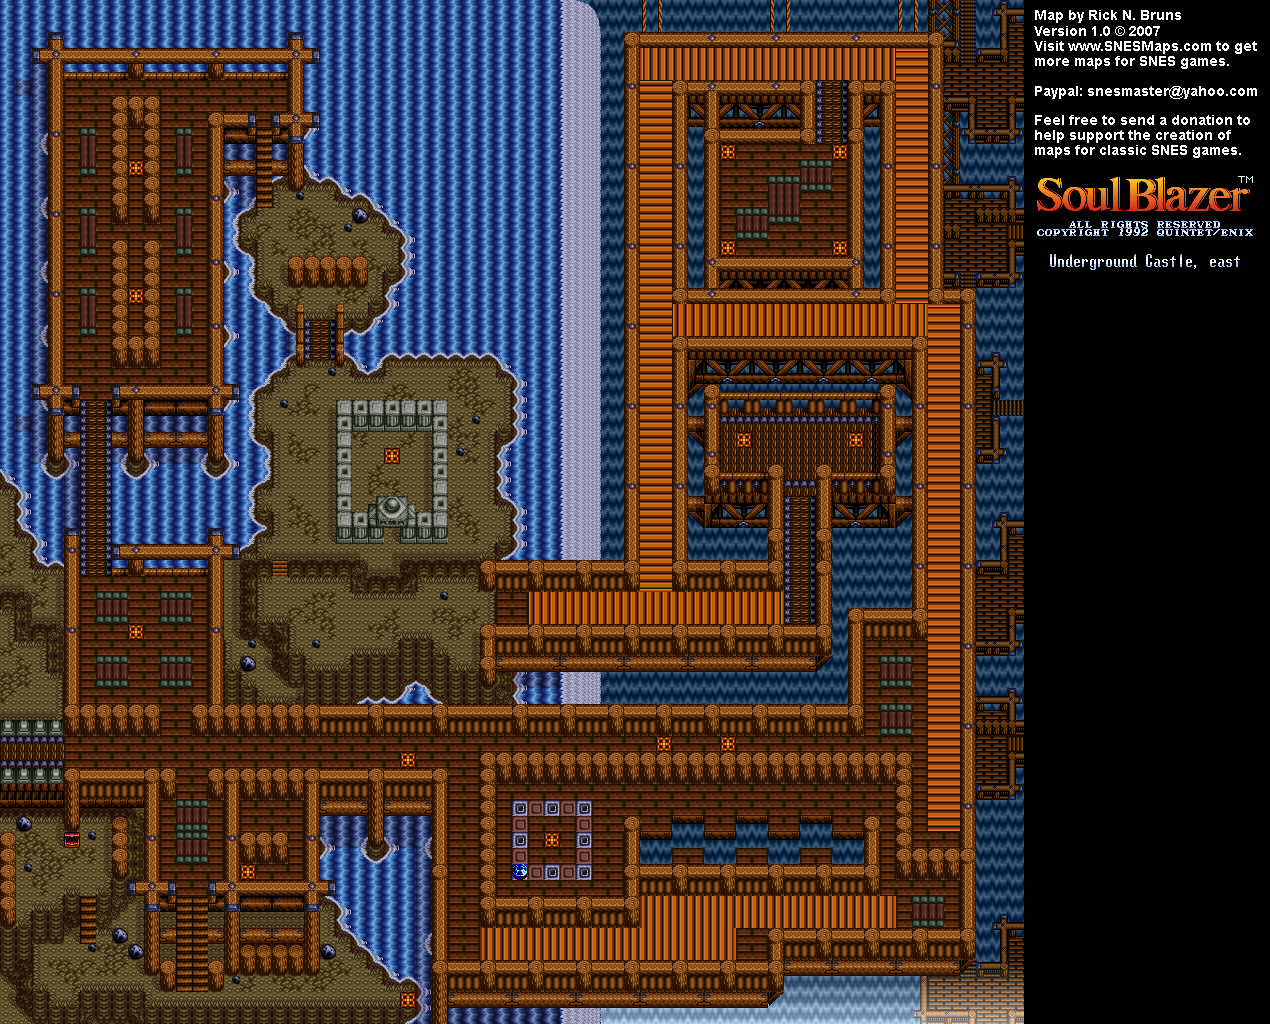 Soul Blazer - Underground Castle, East (After) Map - SNES Super Nintendo